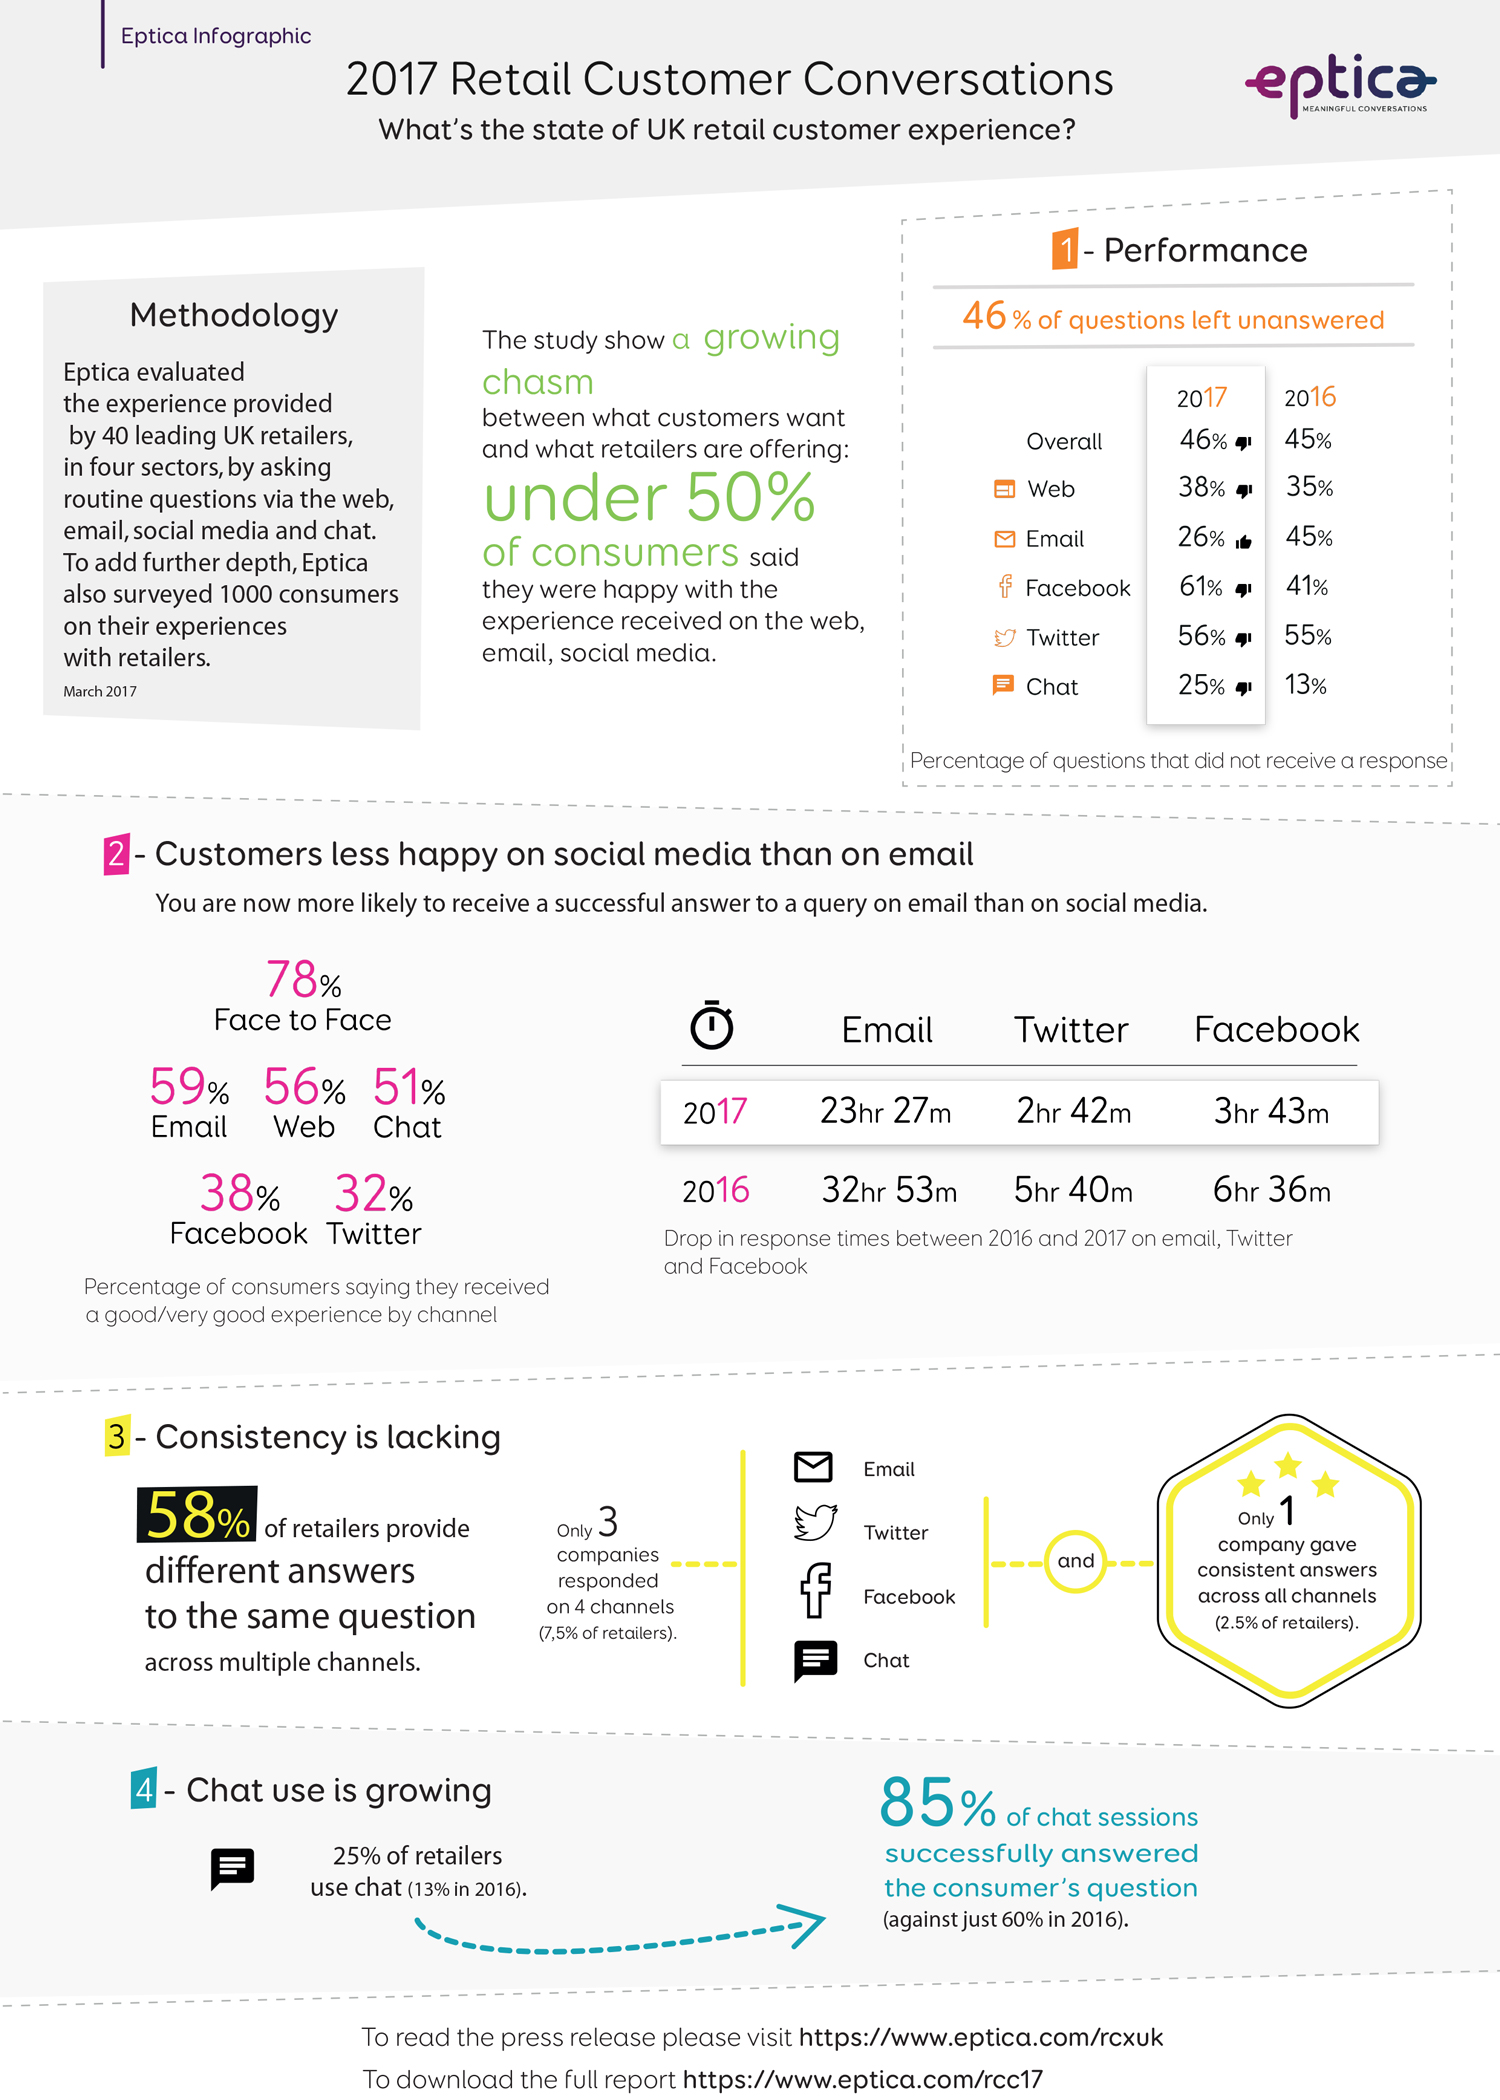 Eptica 2017 UK Retail Customer Conversations Infographic